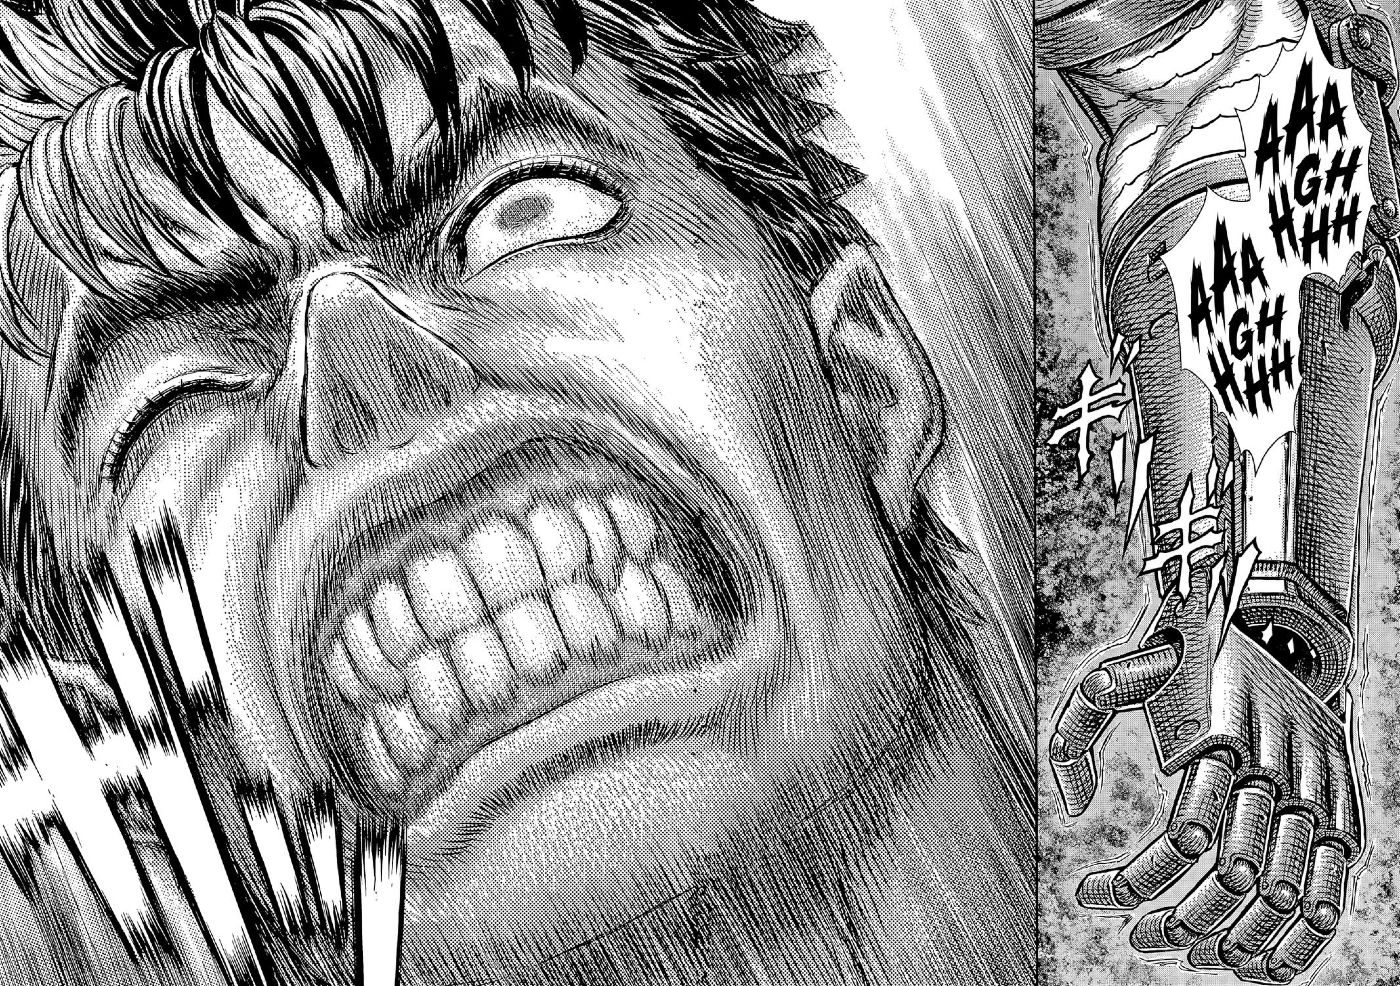 First New 'Berserk' Volume Since Manga Resumed Release Date